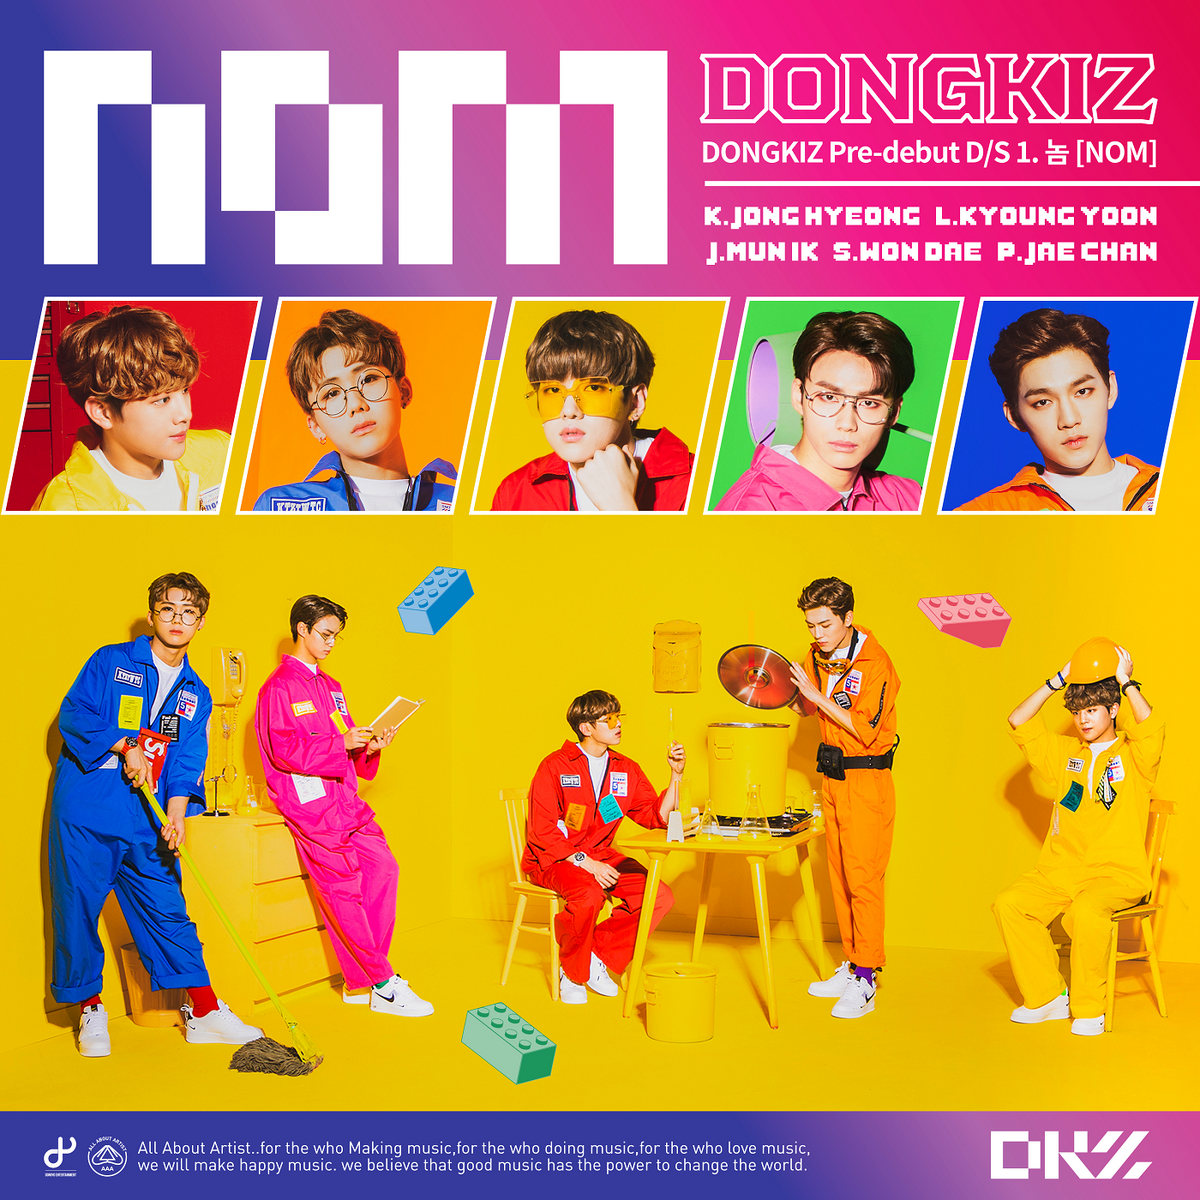 DONGKIZ Pre-debut D/S 1. | DKZ Wiki | Fandom